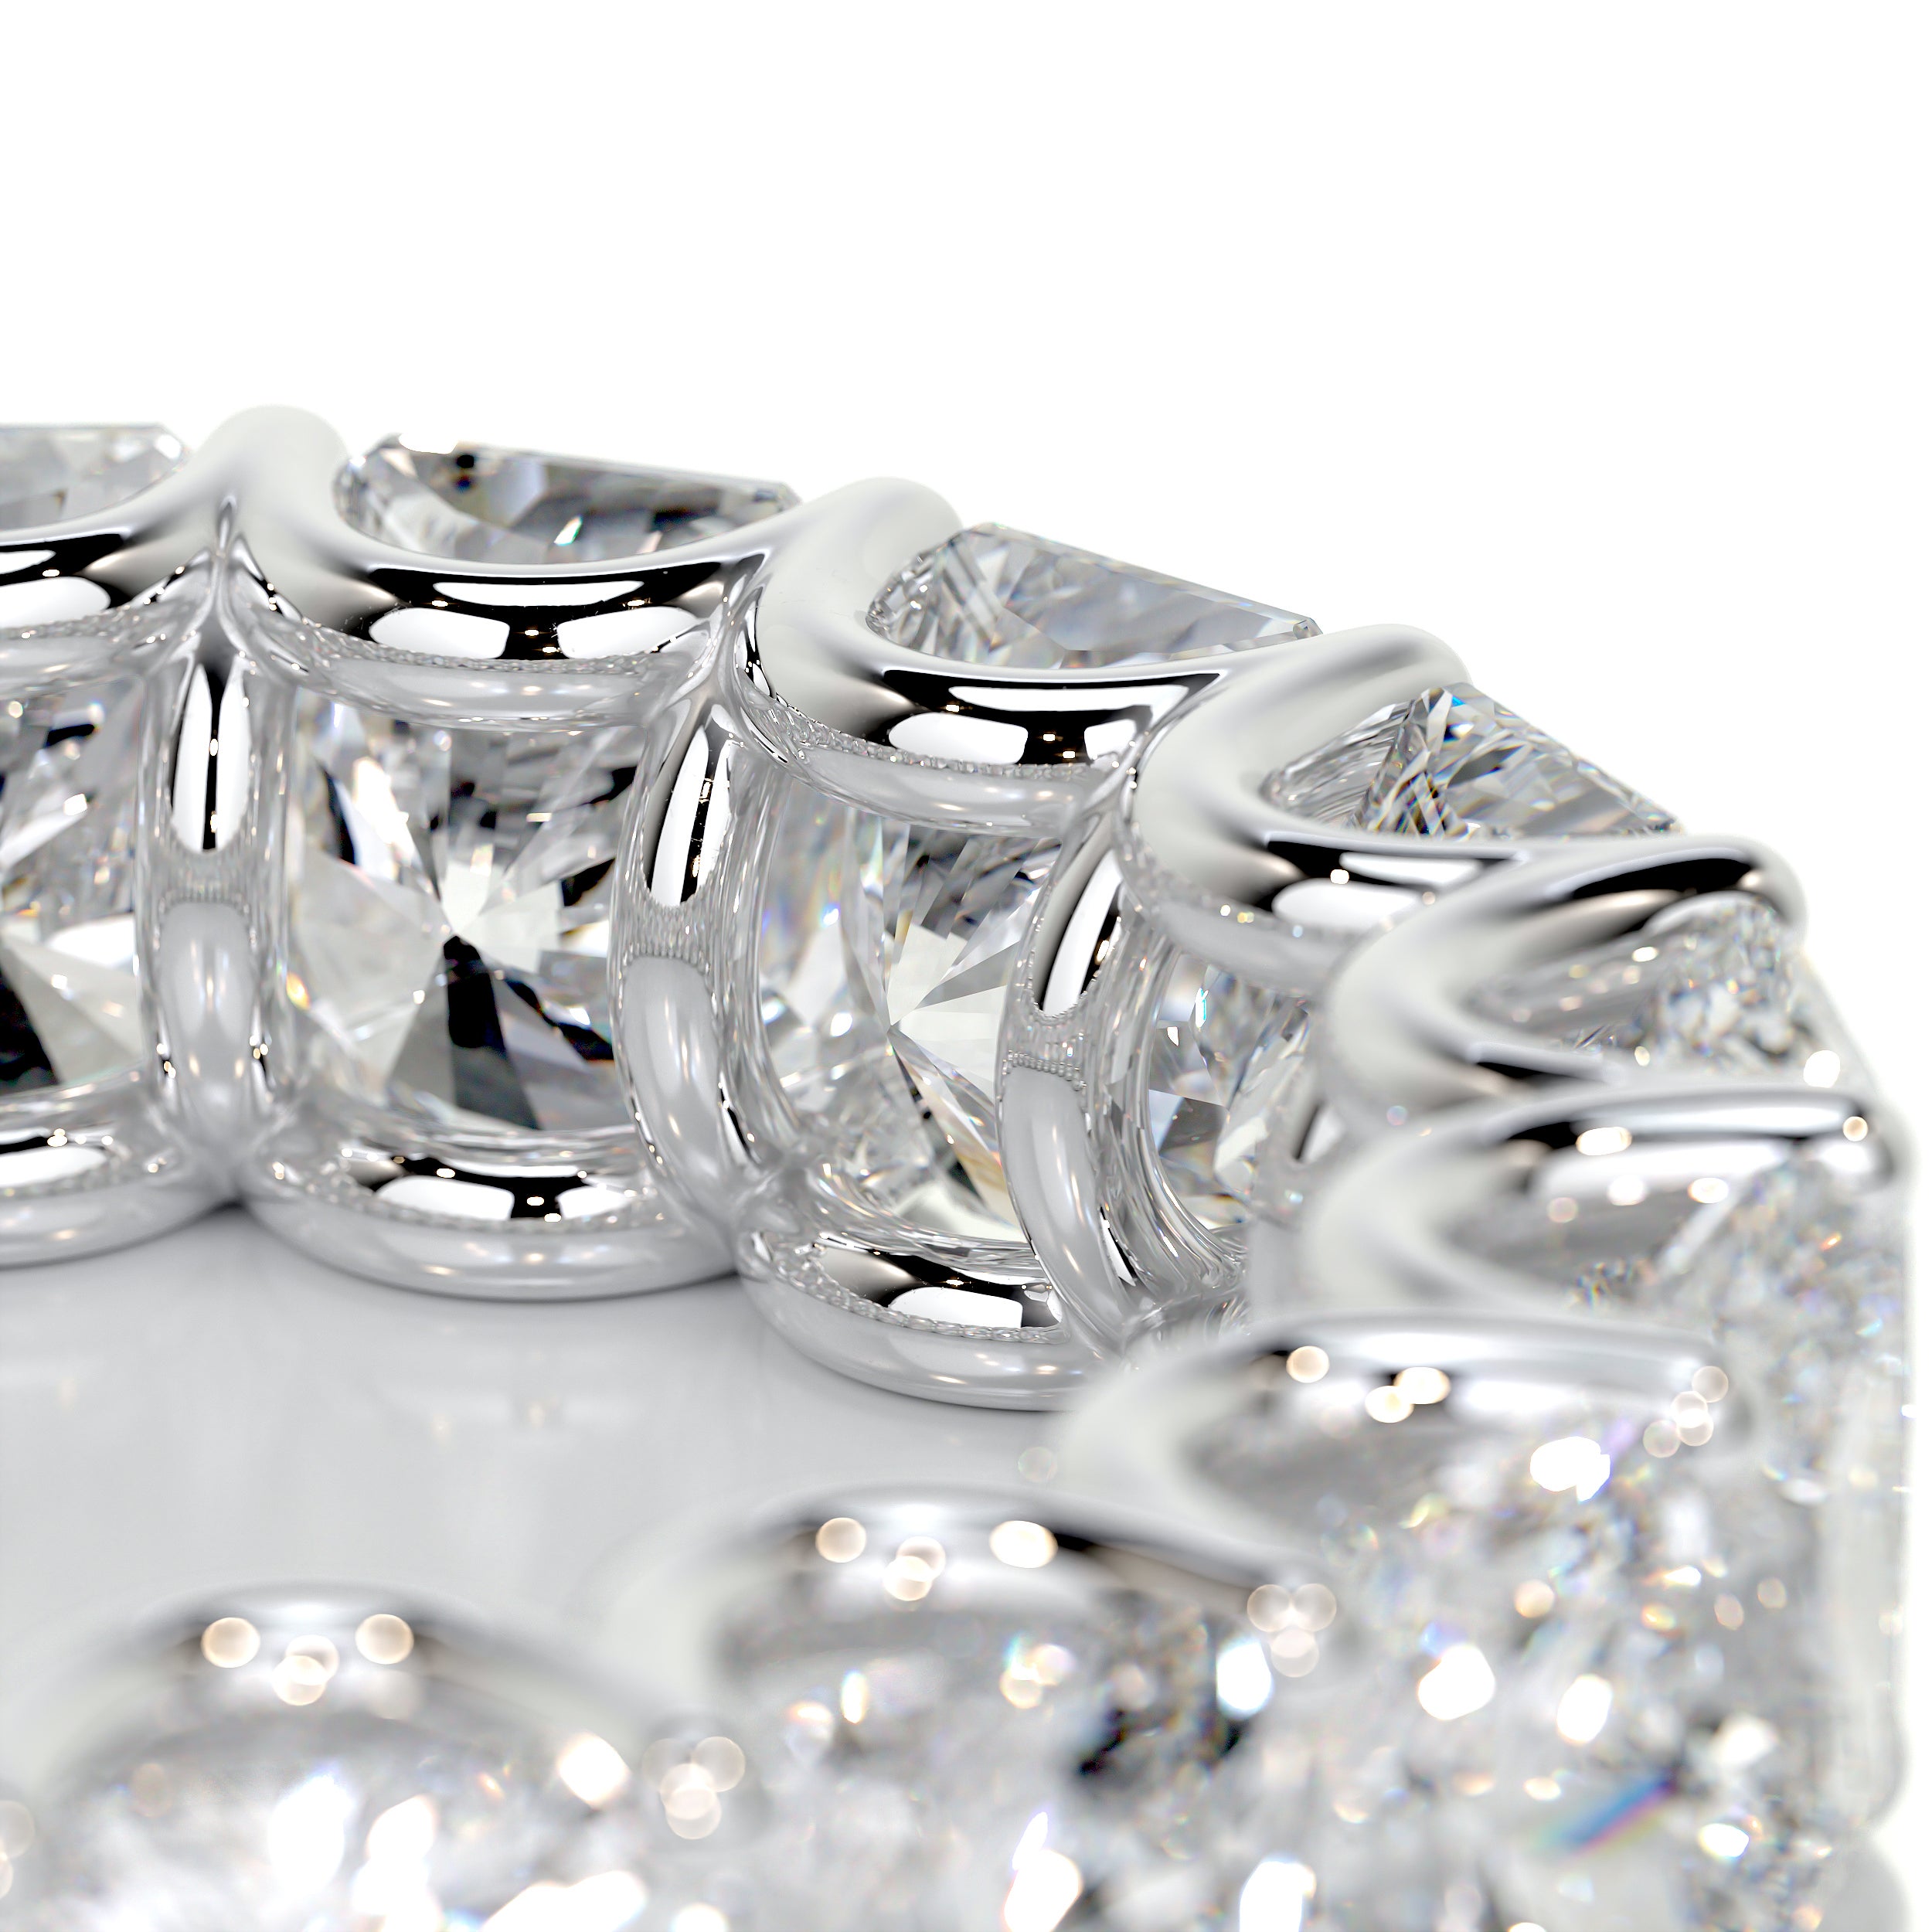 Andi Eternity Wedding Ring   (5 Carat) - Platinum